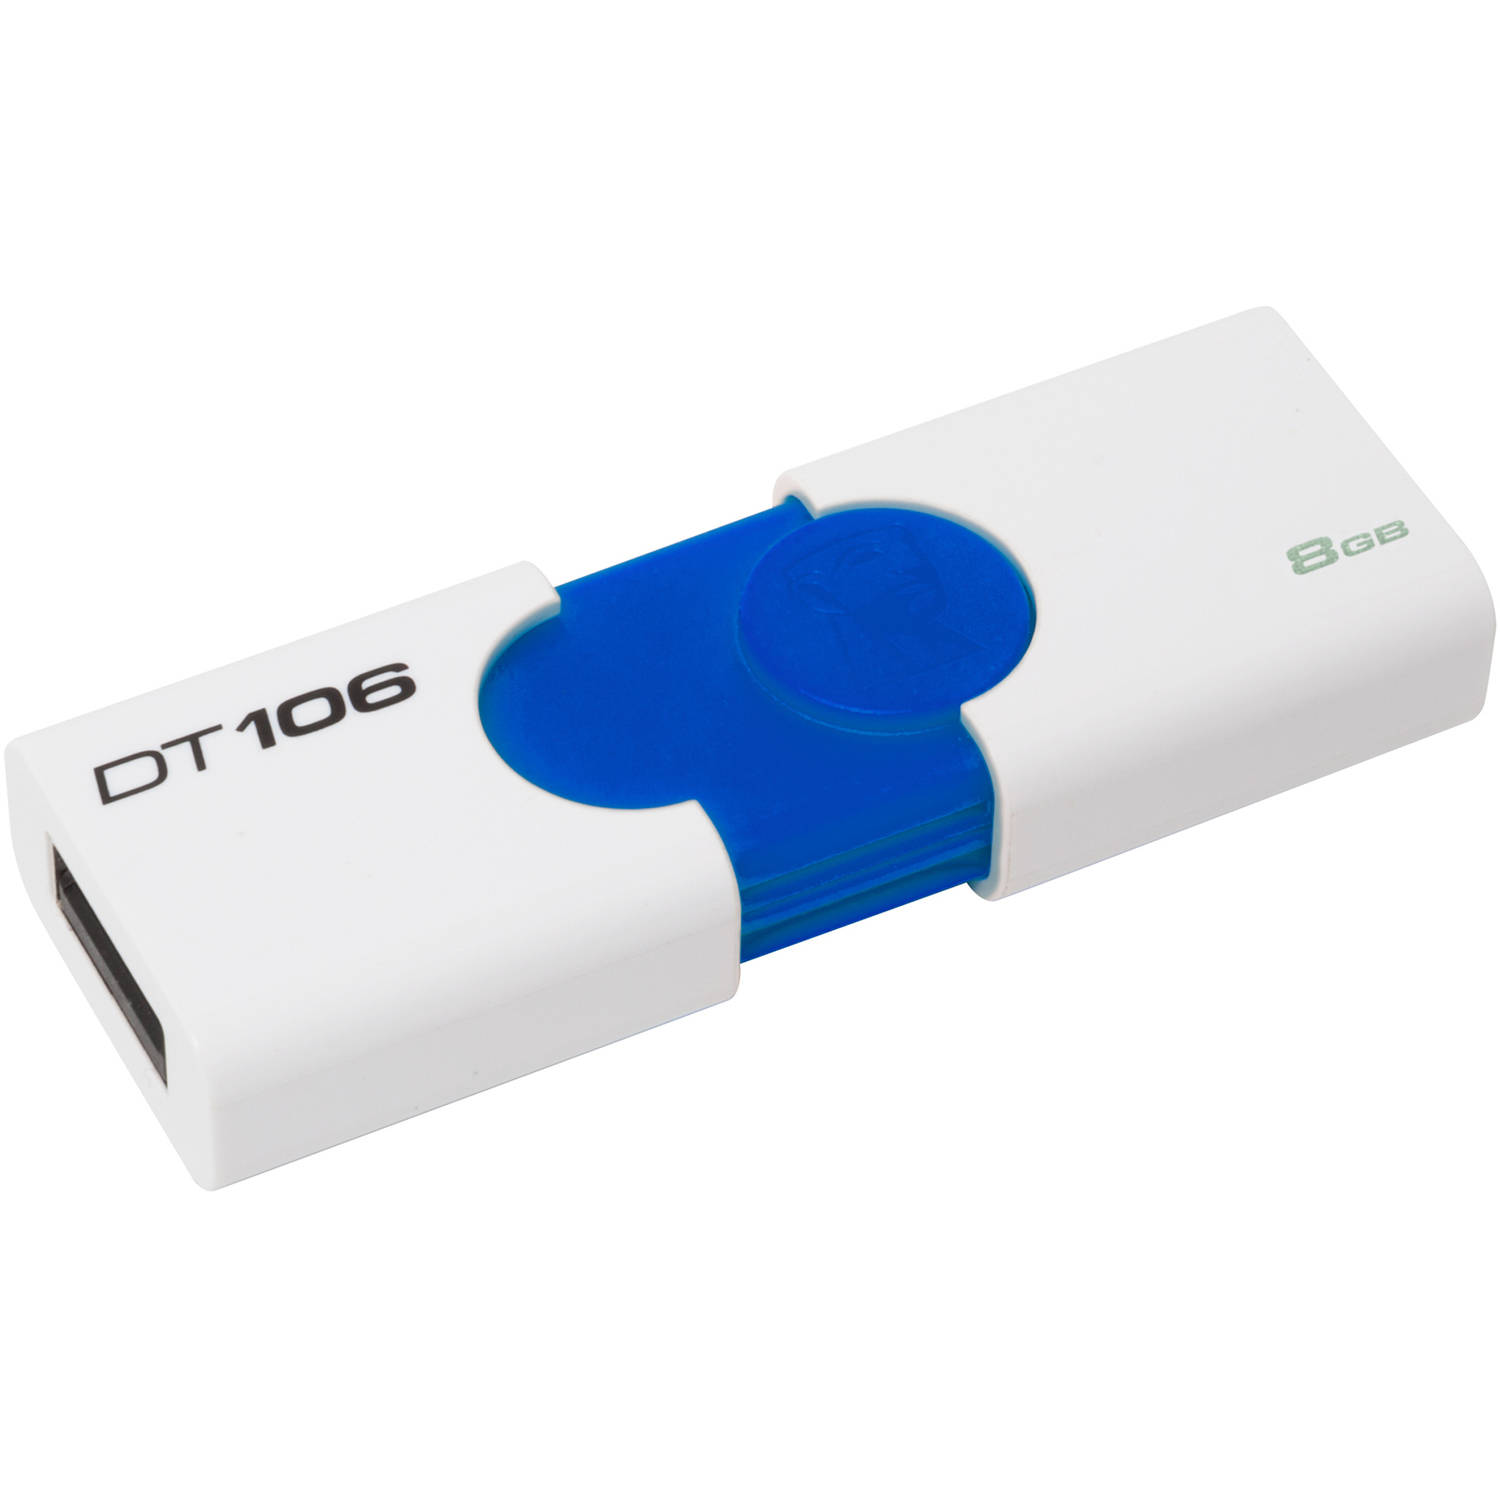 USB KINGSTON DT106 8GB 2.0